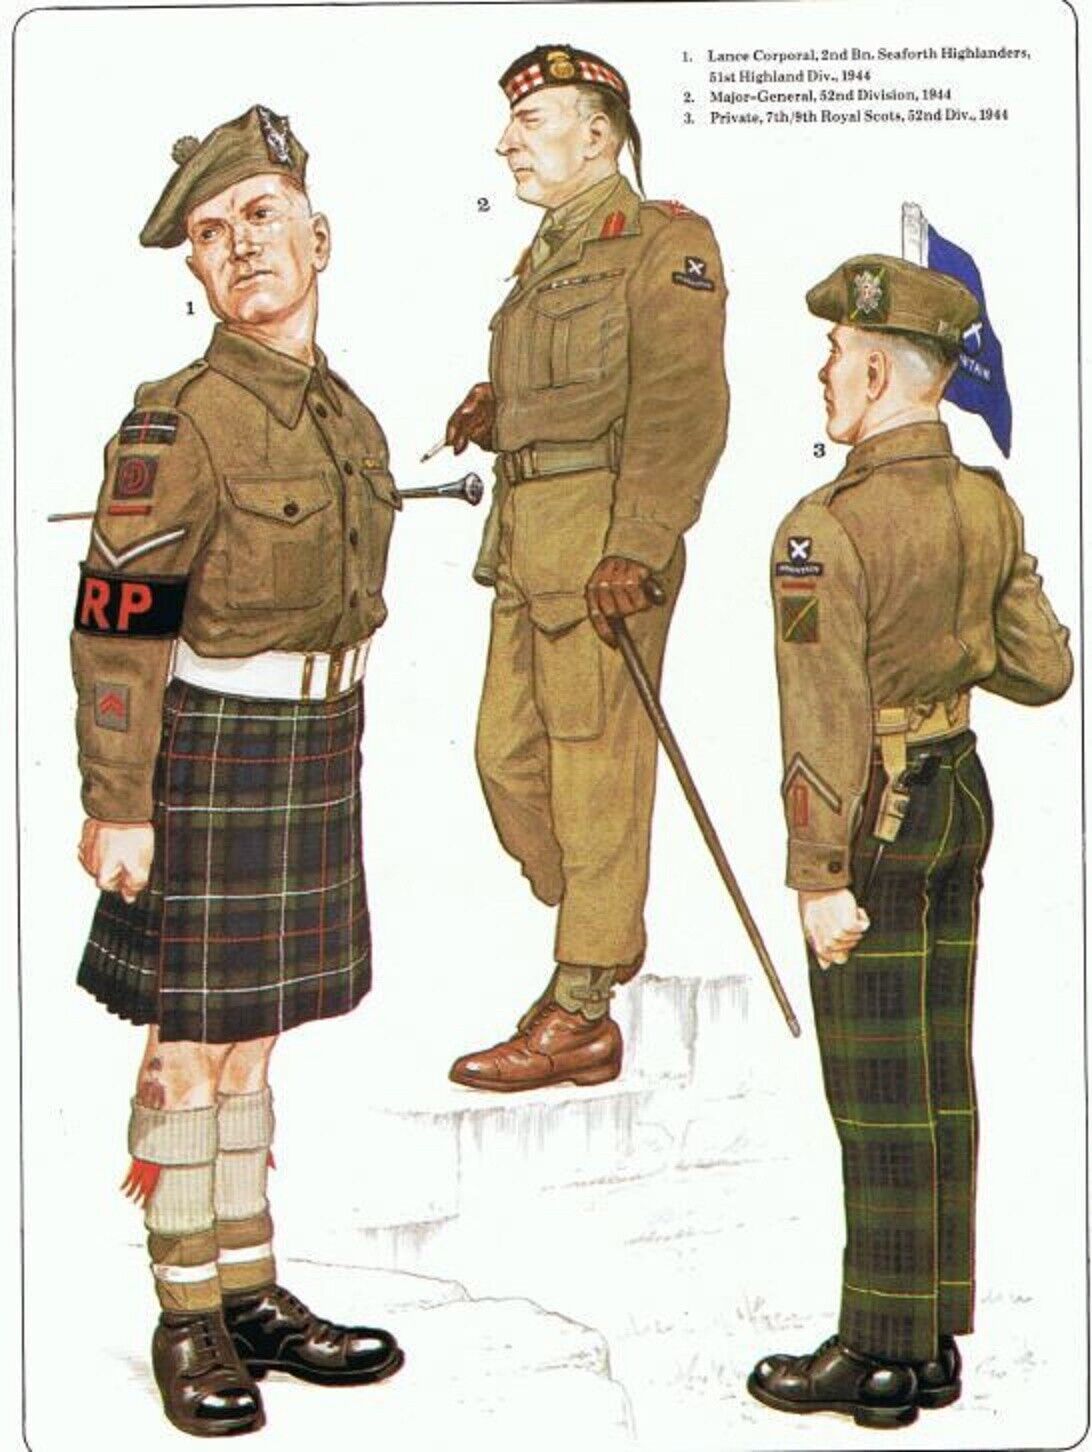 WW2 British Army Scottish Regiment white web tape for puttees worn with kilt